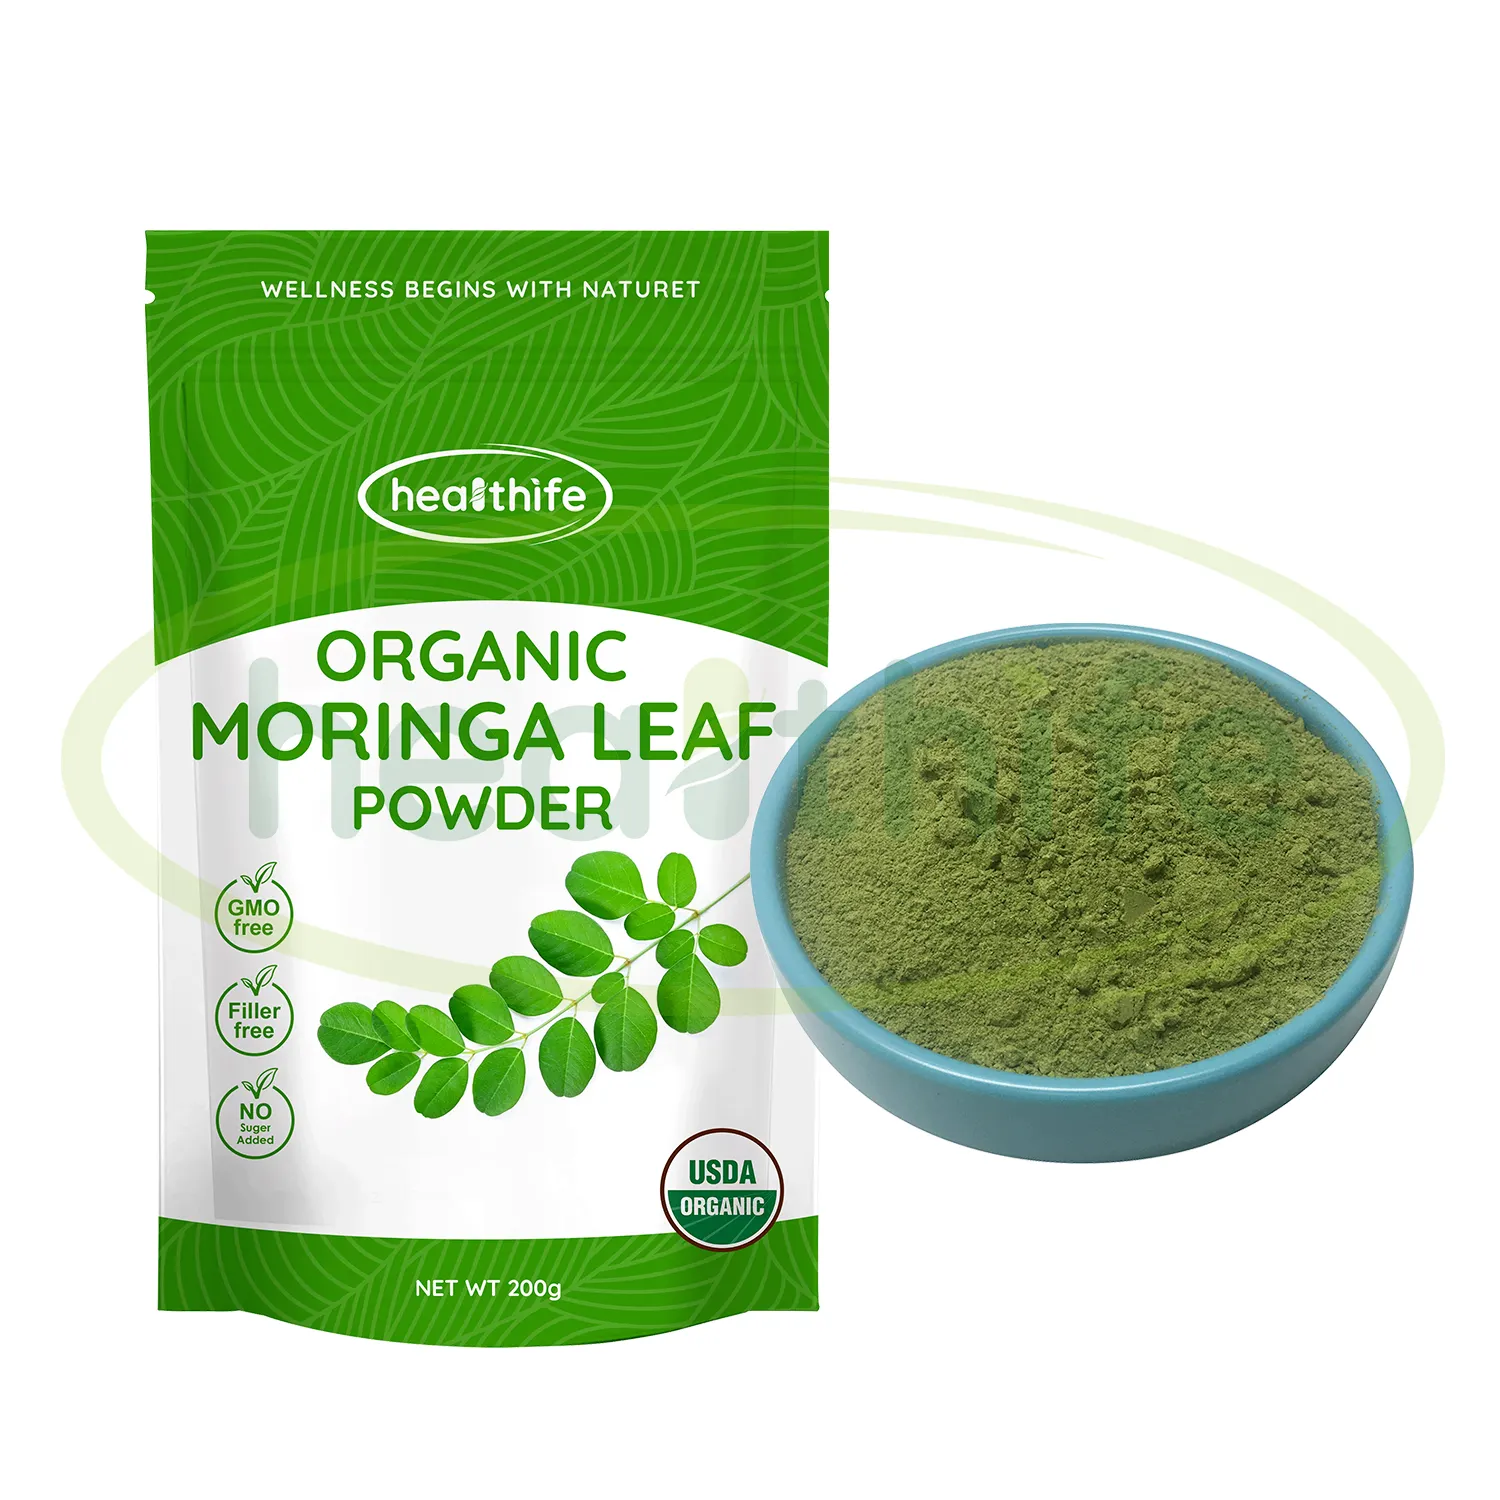 Extrait de feuilles de Moringa Healthife, poudre de feuille de Moringa biologique